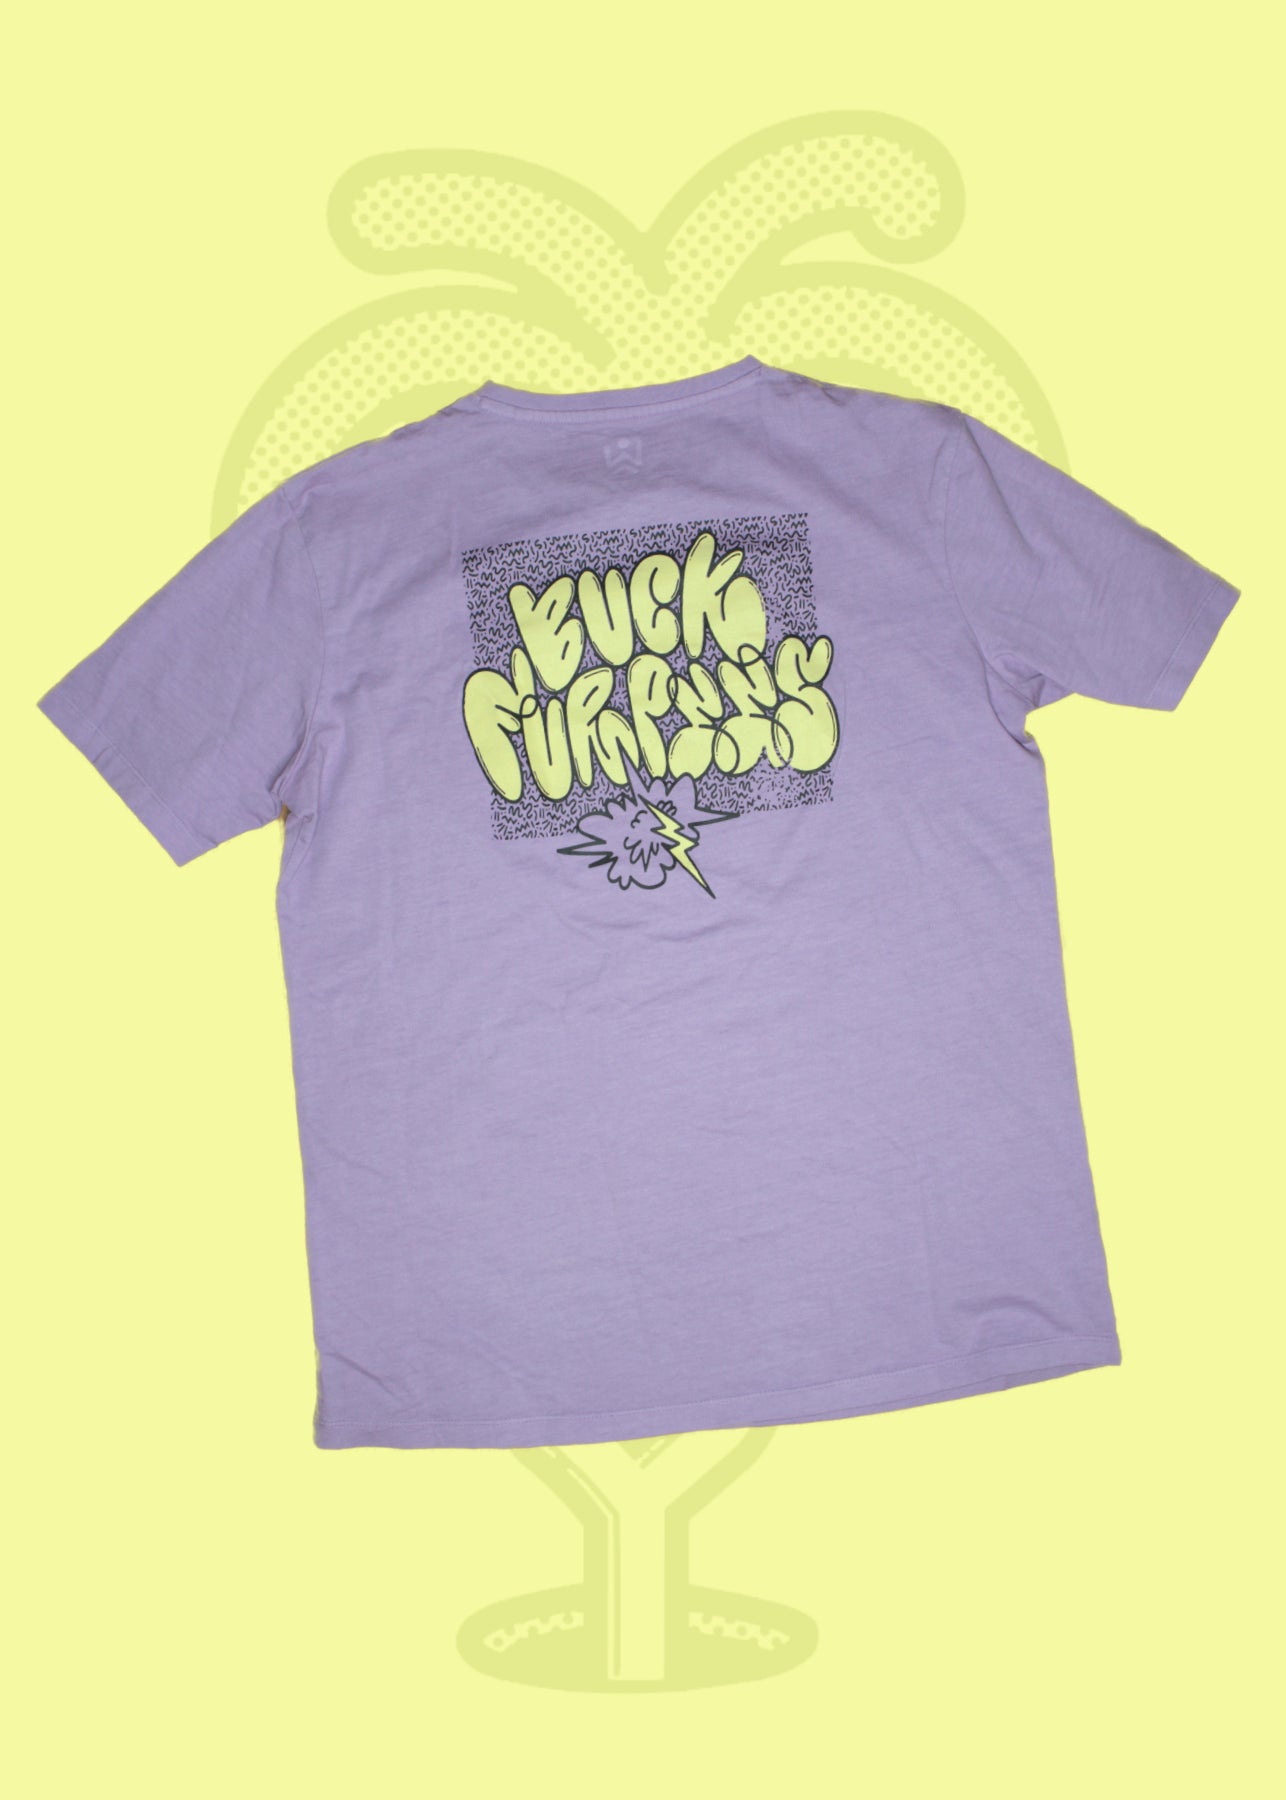 Buck Furpees T-shirt